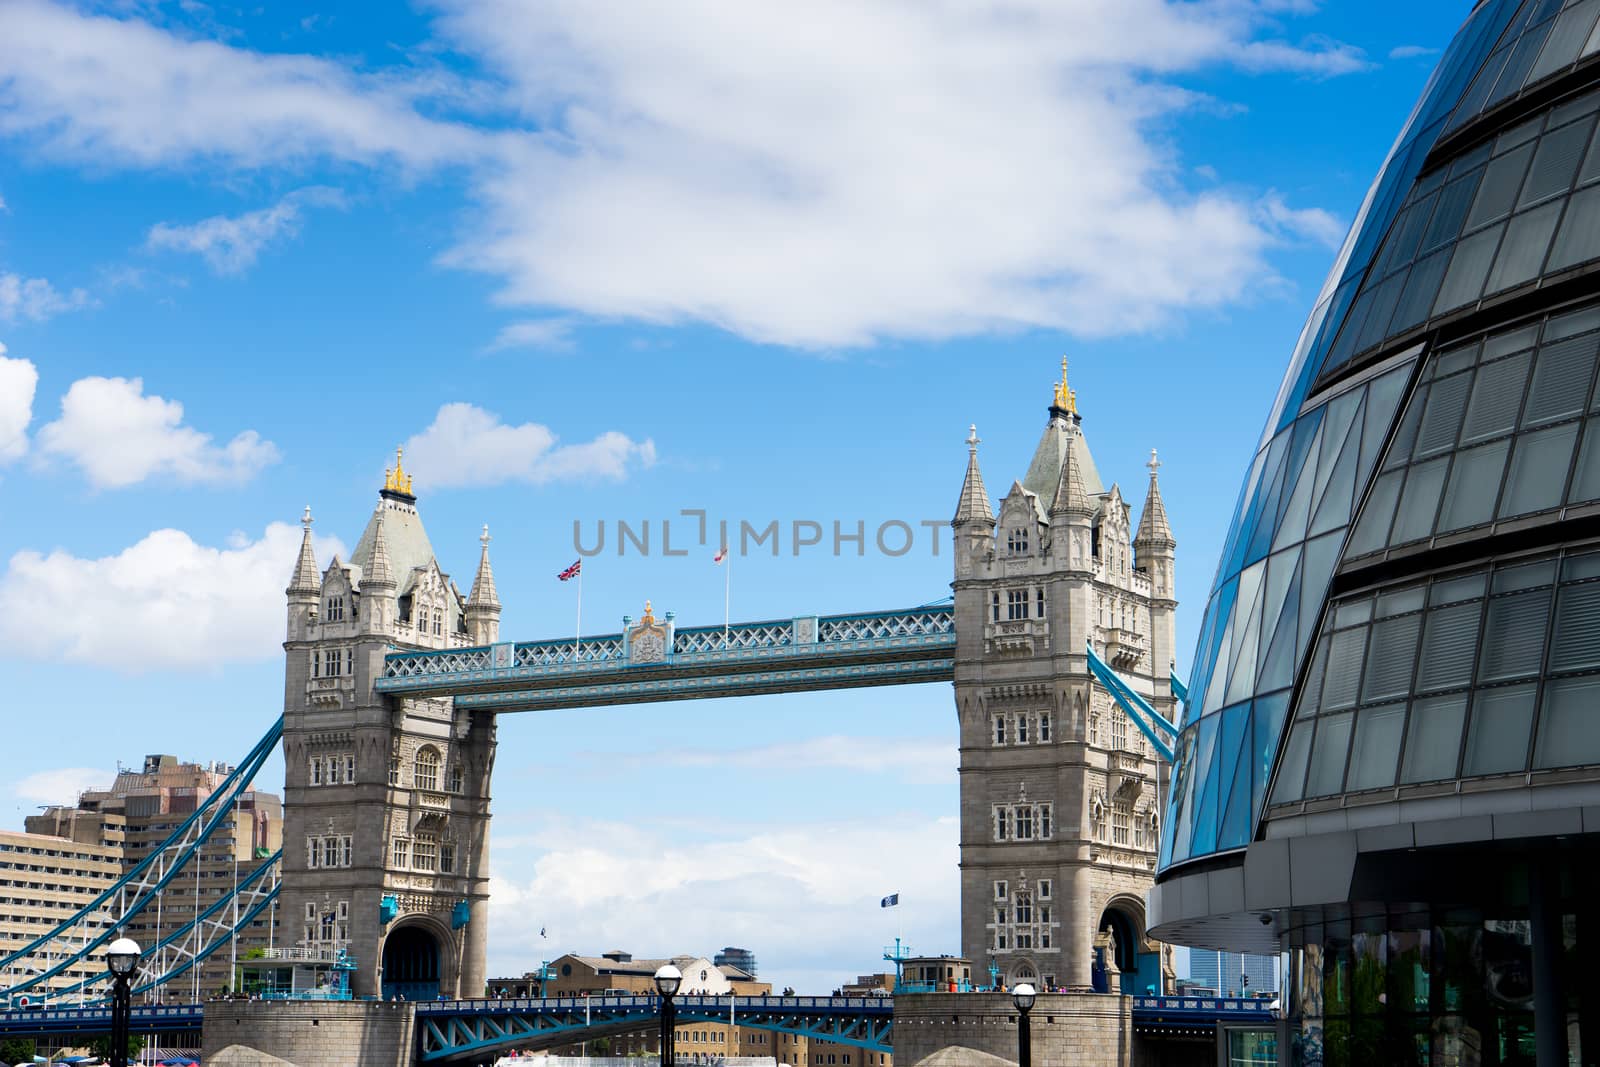 Tower Bridge, London UK in summer by Alicephoto